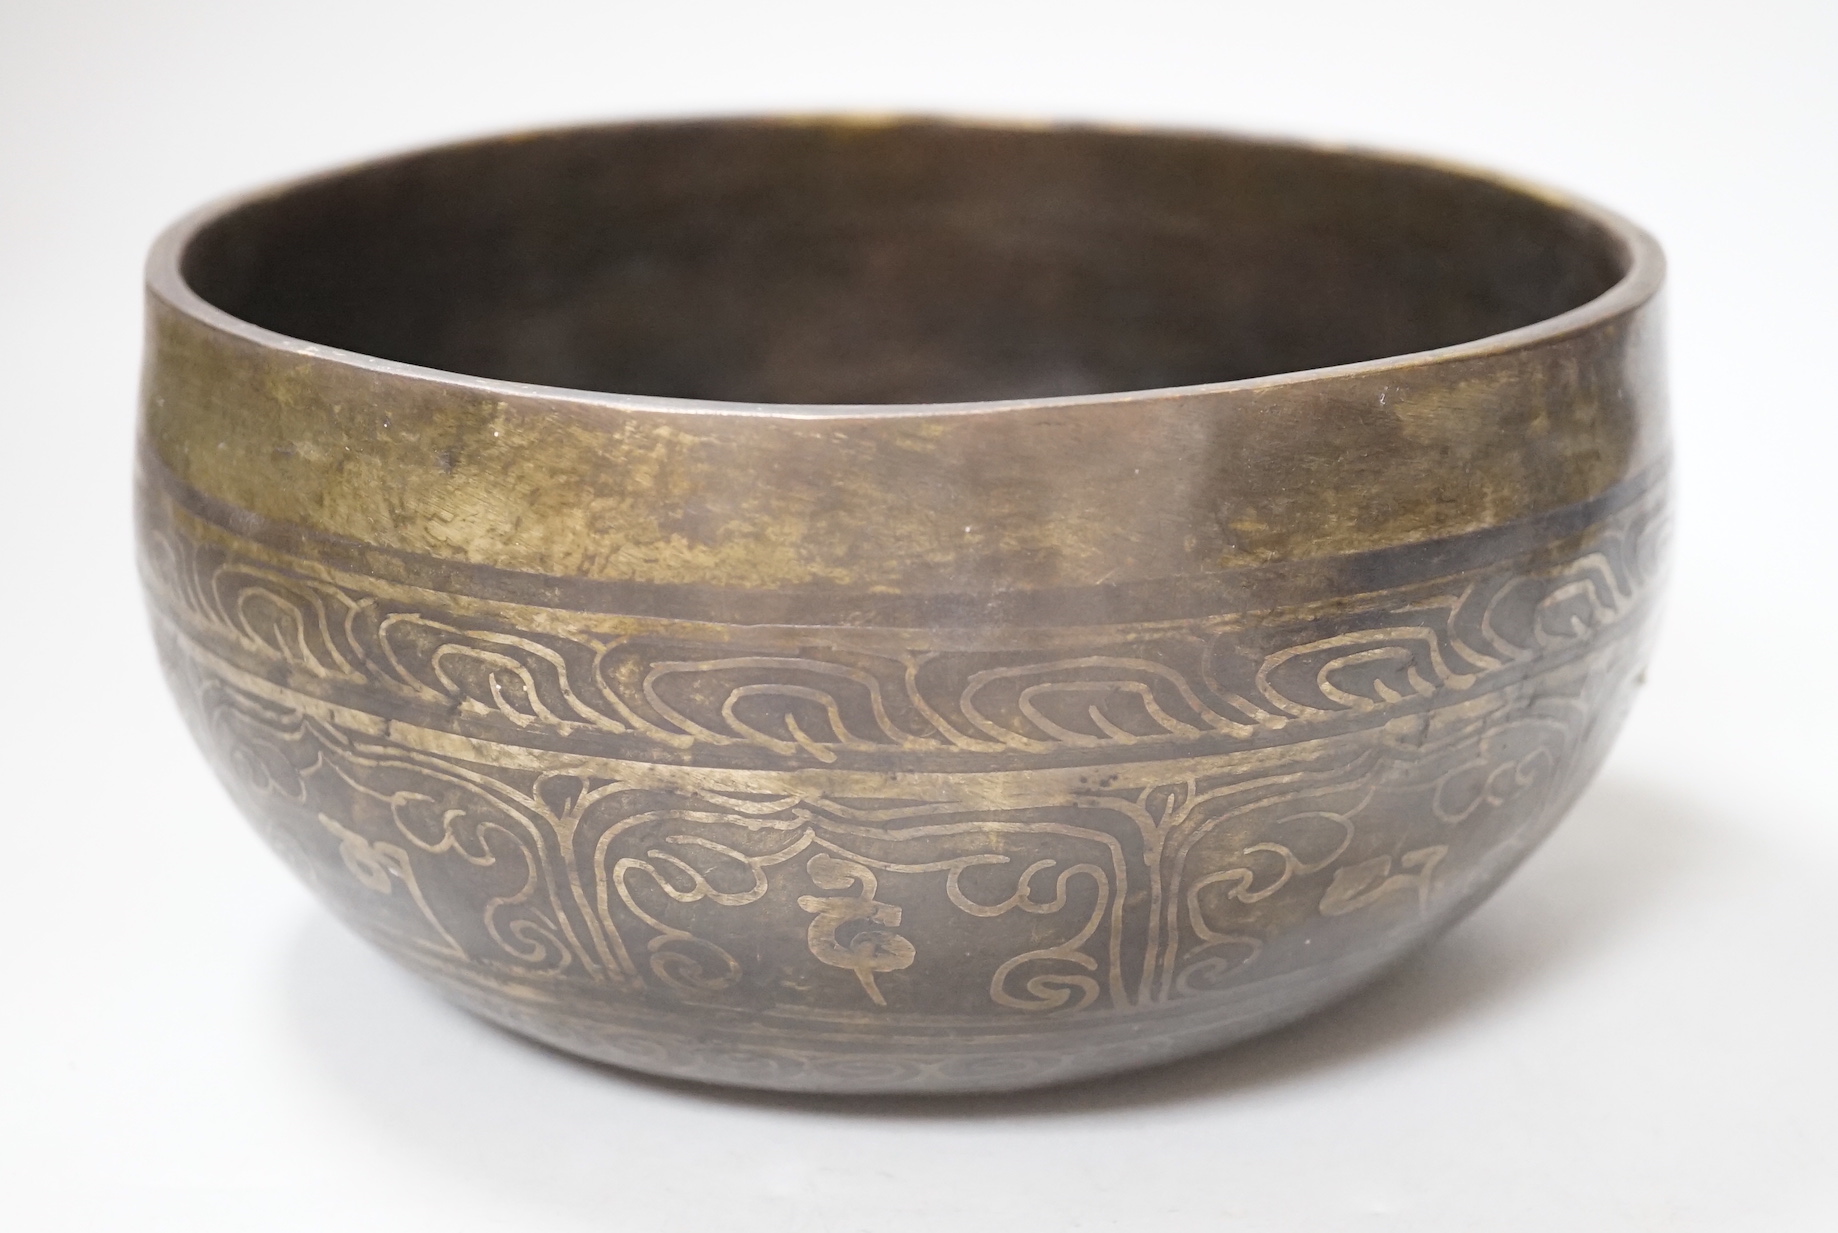 A Tibetan singing bowl with Sanskrit inscription, 19cm diameter